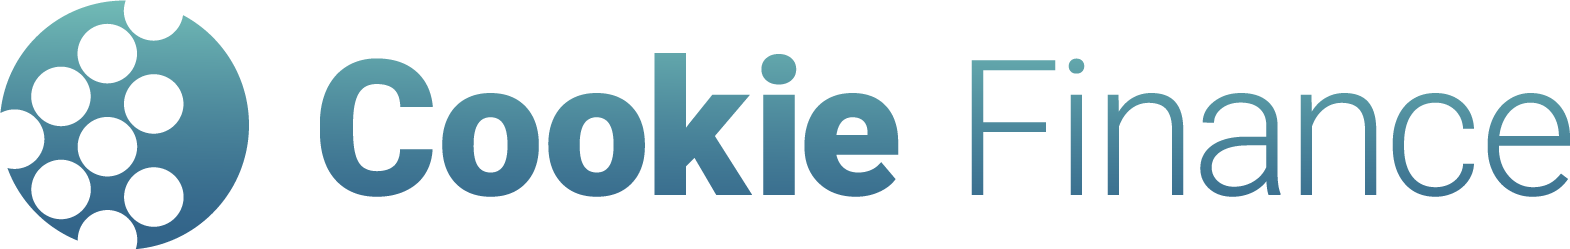 cookie finance logo.jpeg